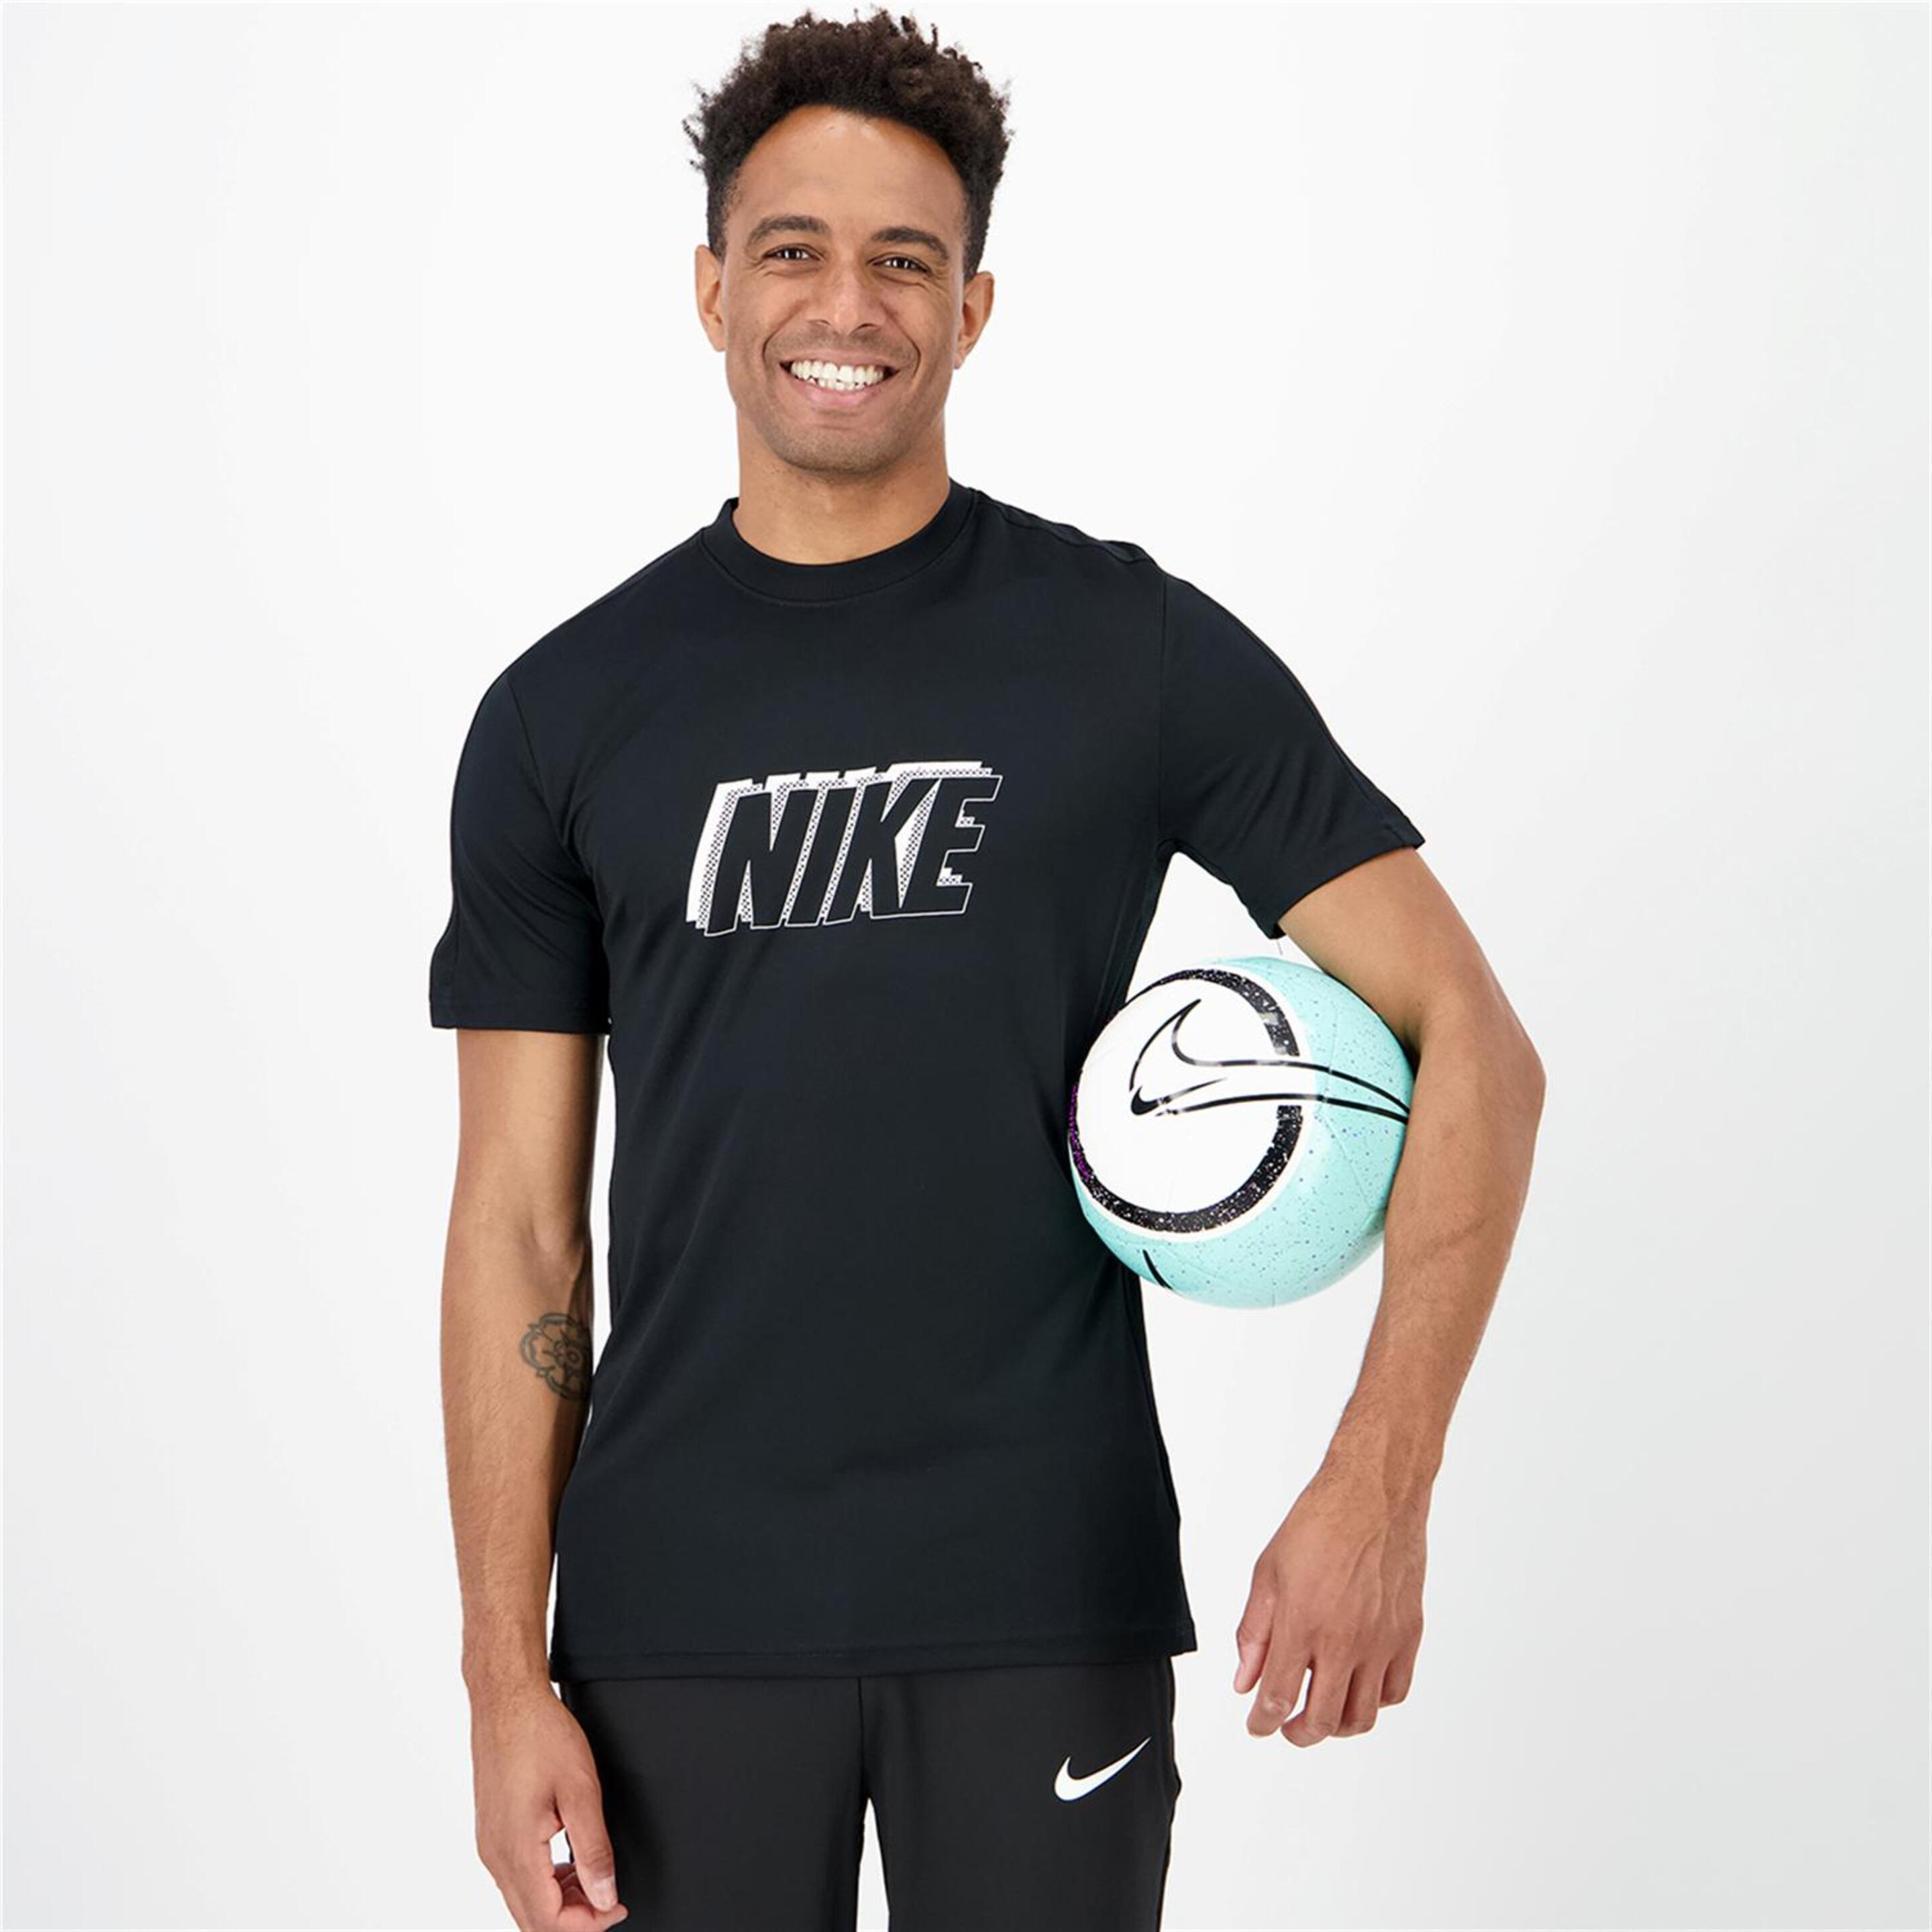 Camiseta Nike - negro - Camiseta Hombre